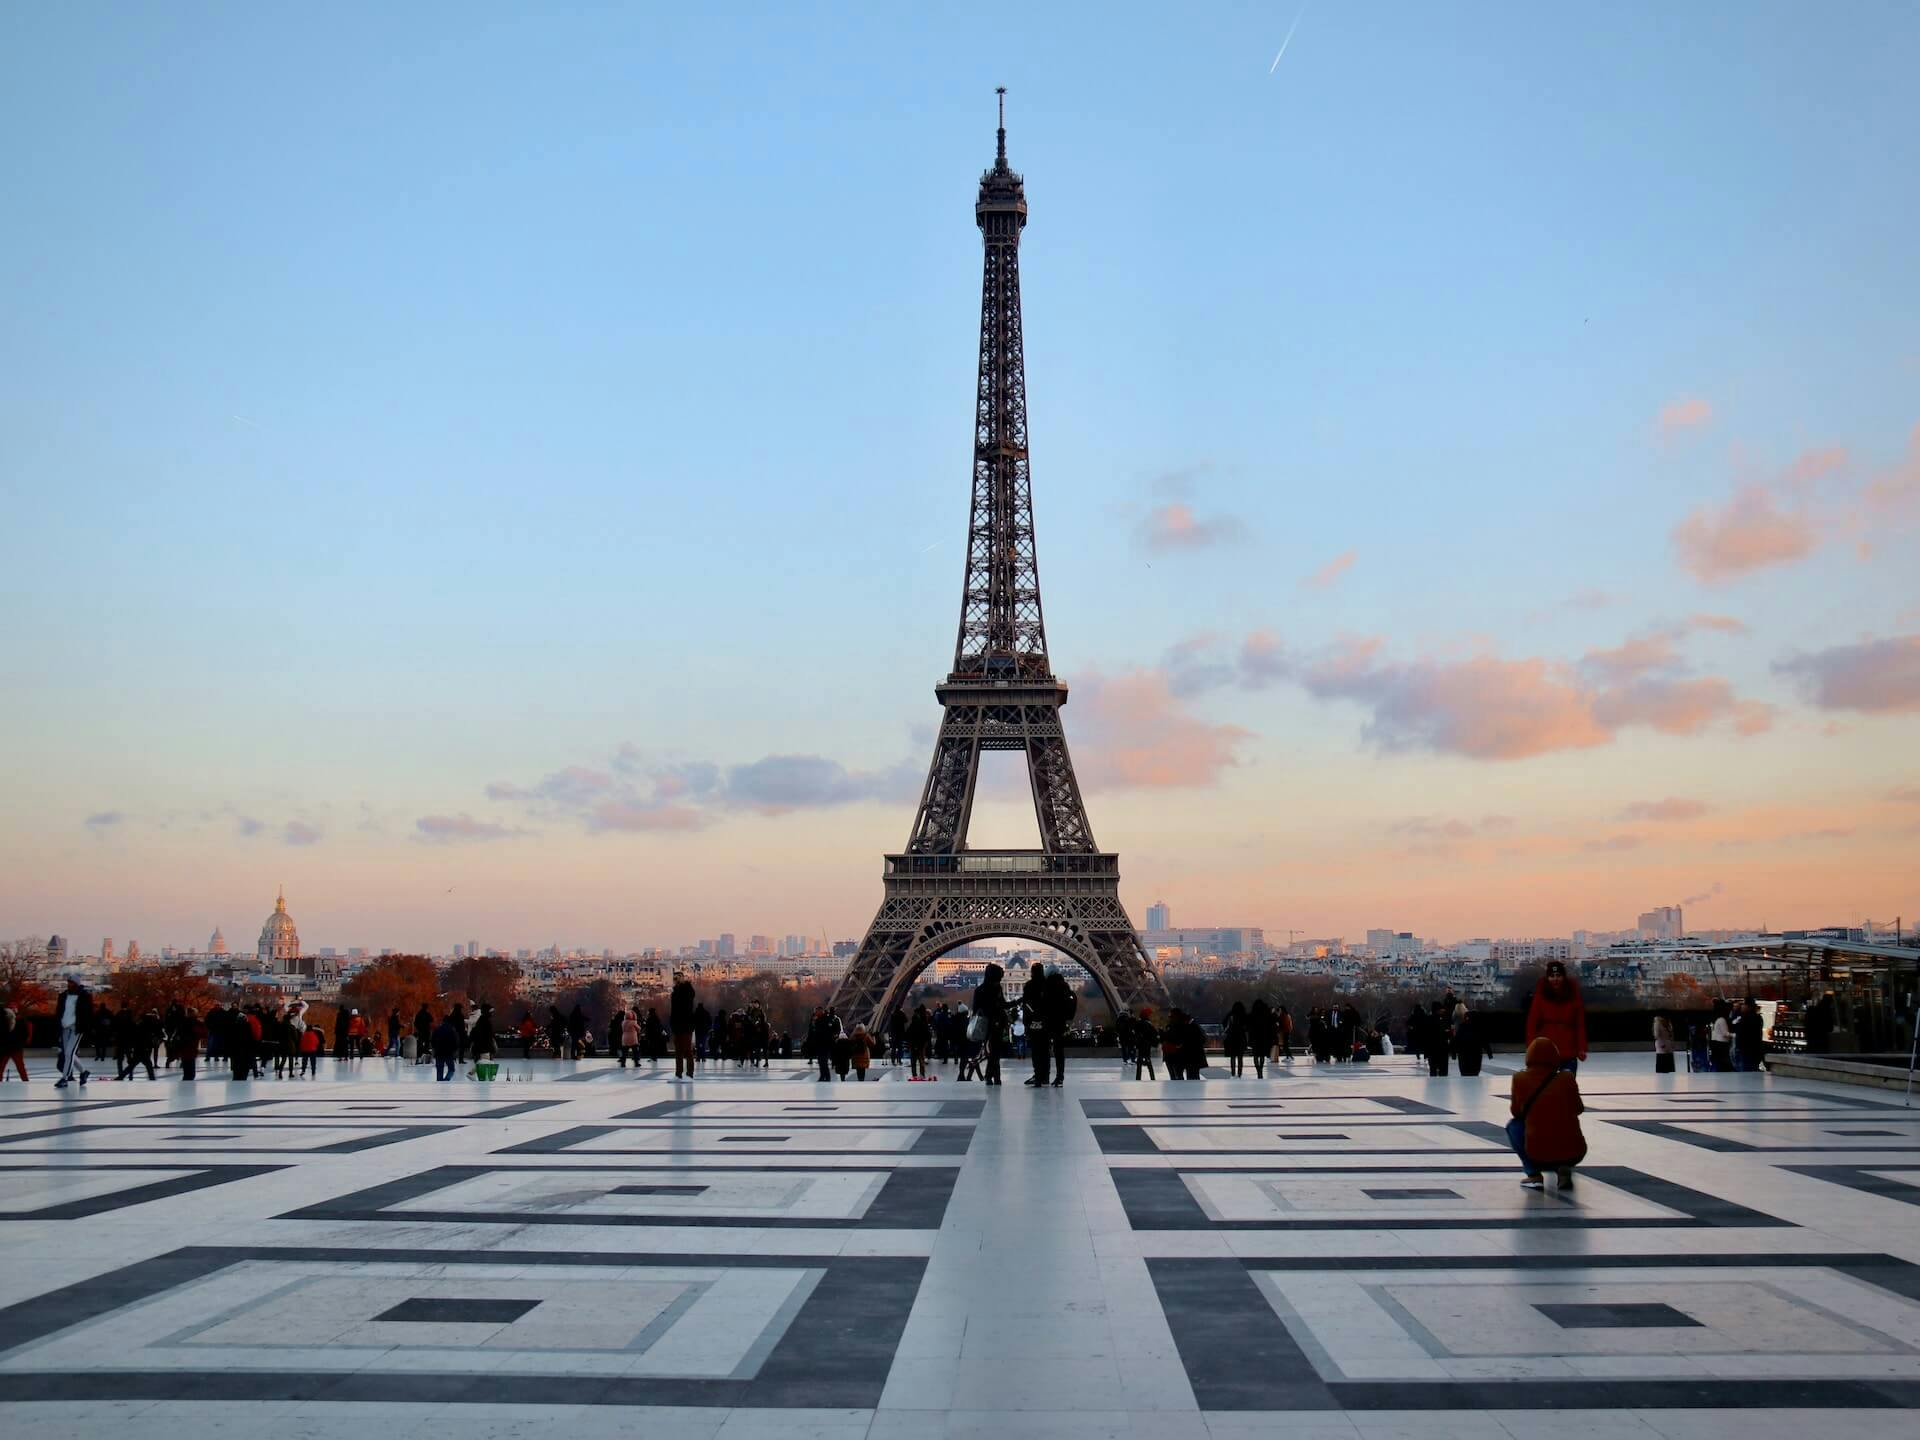 Eiffel Tower at Paris, France